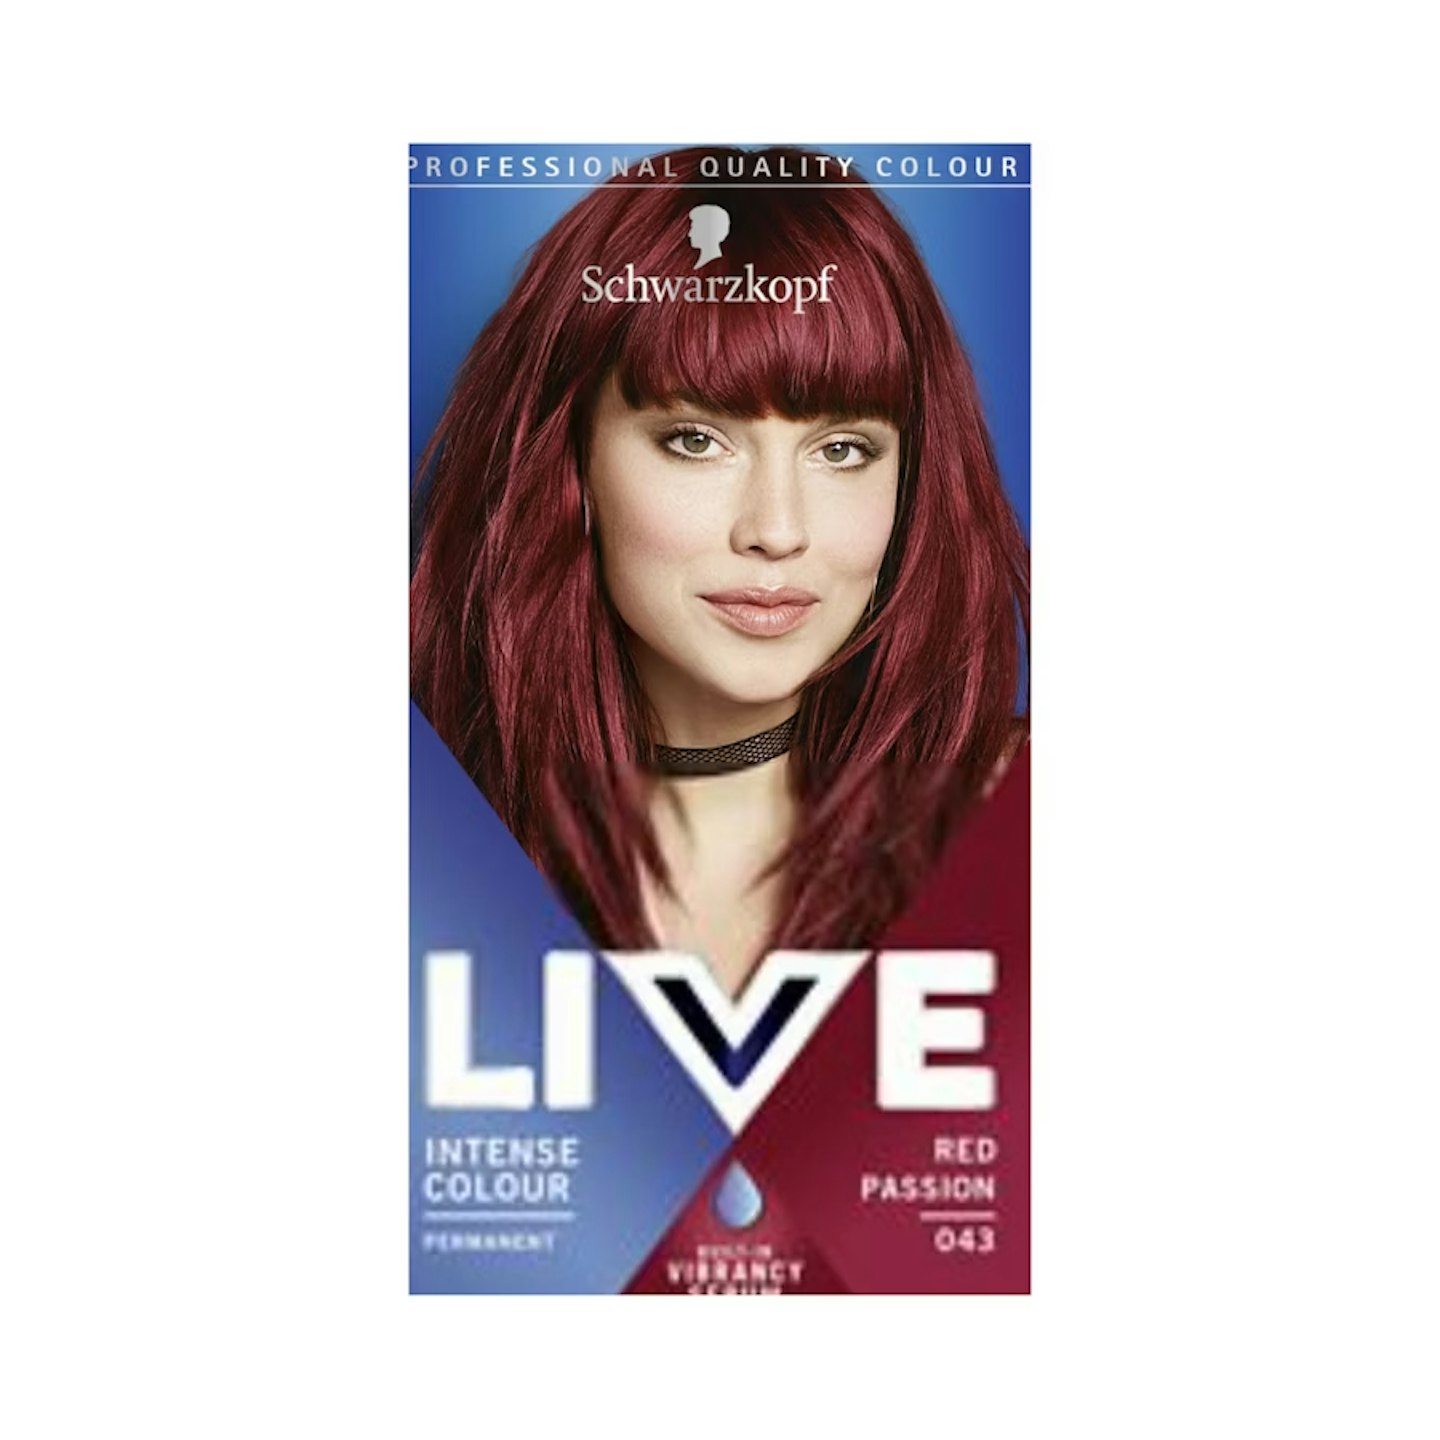 Schwarzkopf LIVE Permanent Hair Dye - Red Passion